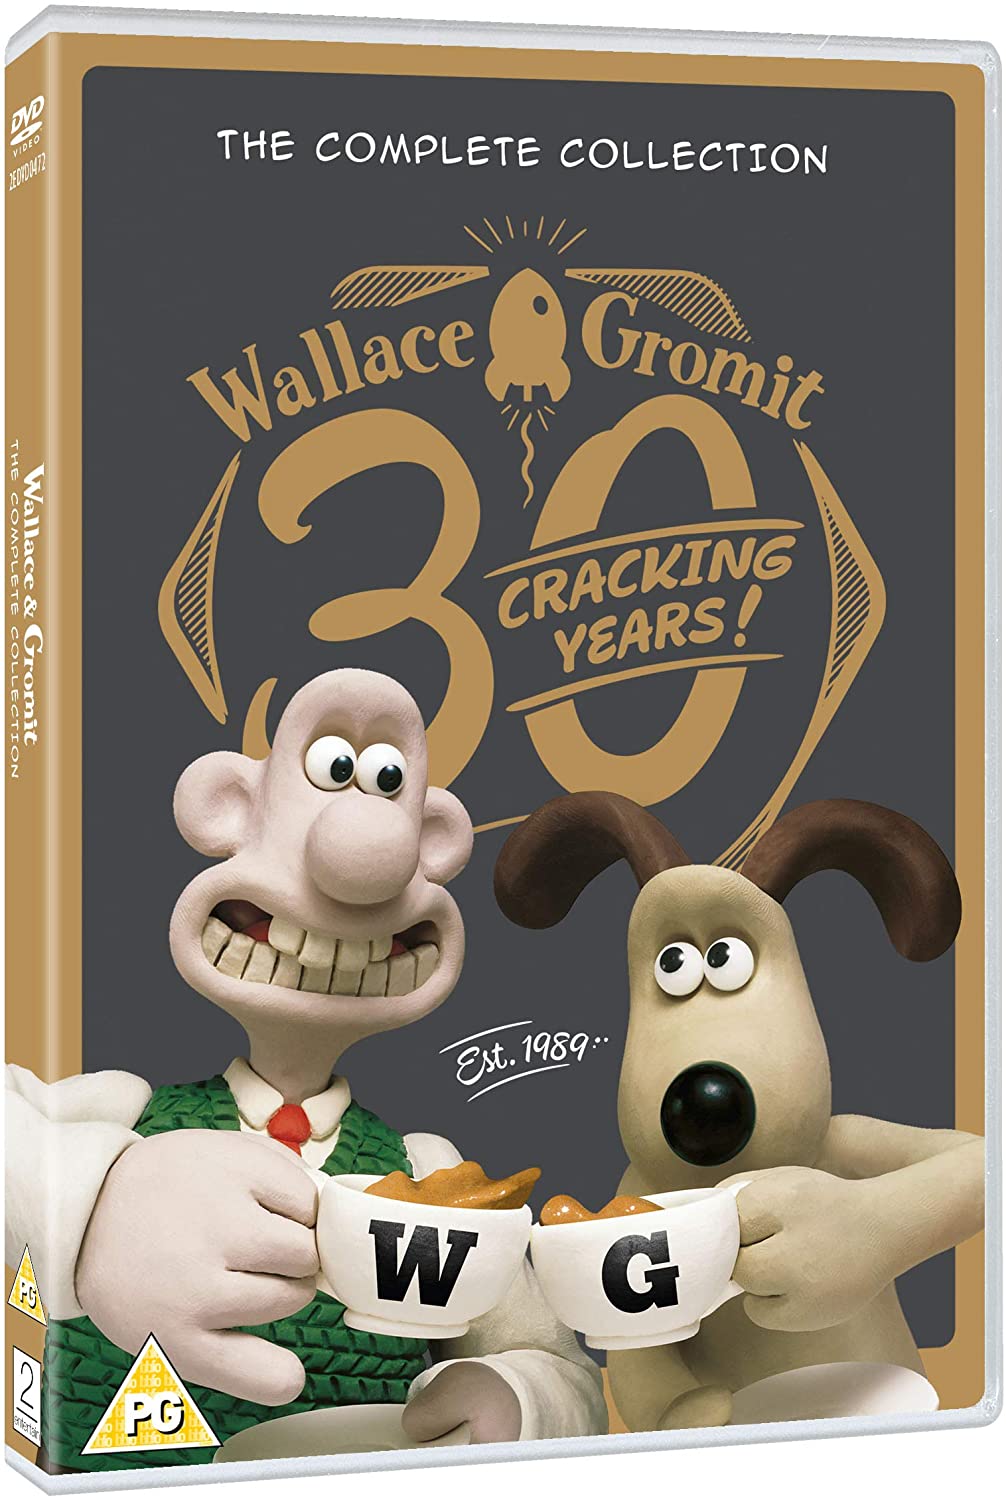 Wallace &amp; Gromit - The Complete Collection [DVD] (la imagen de la portada del CD puede variar)